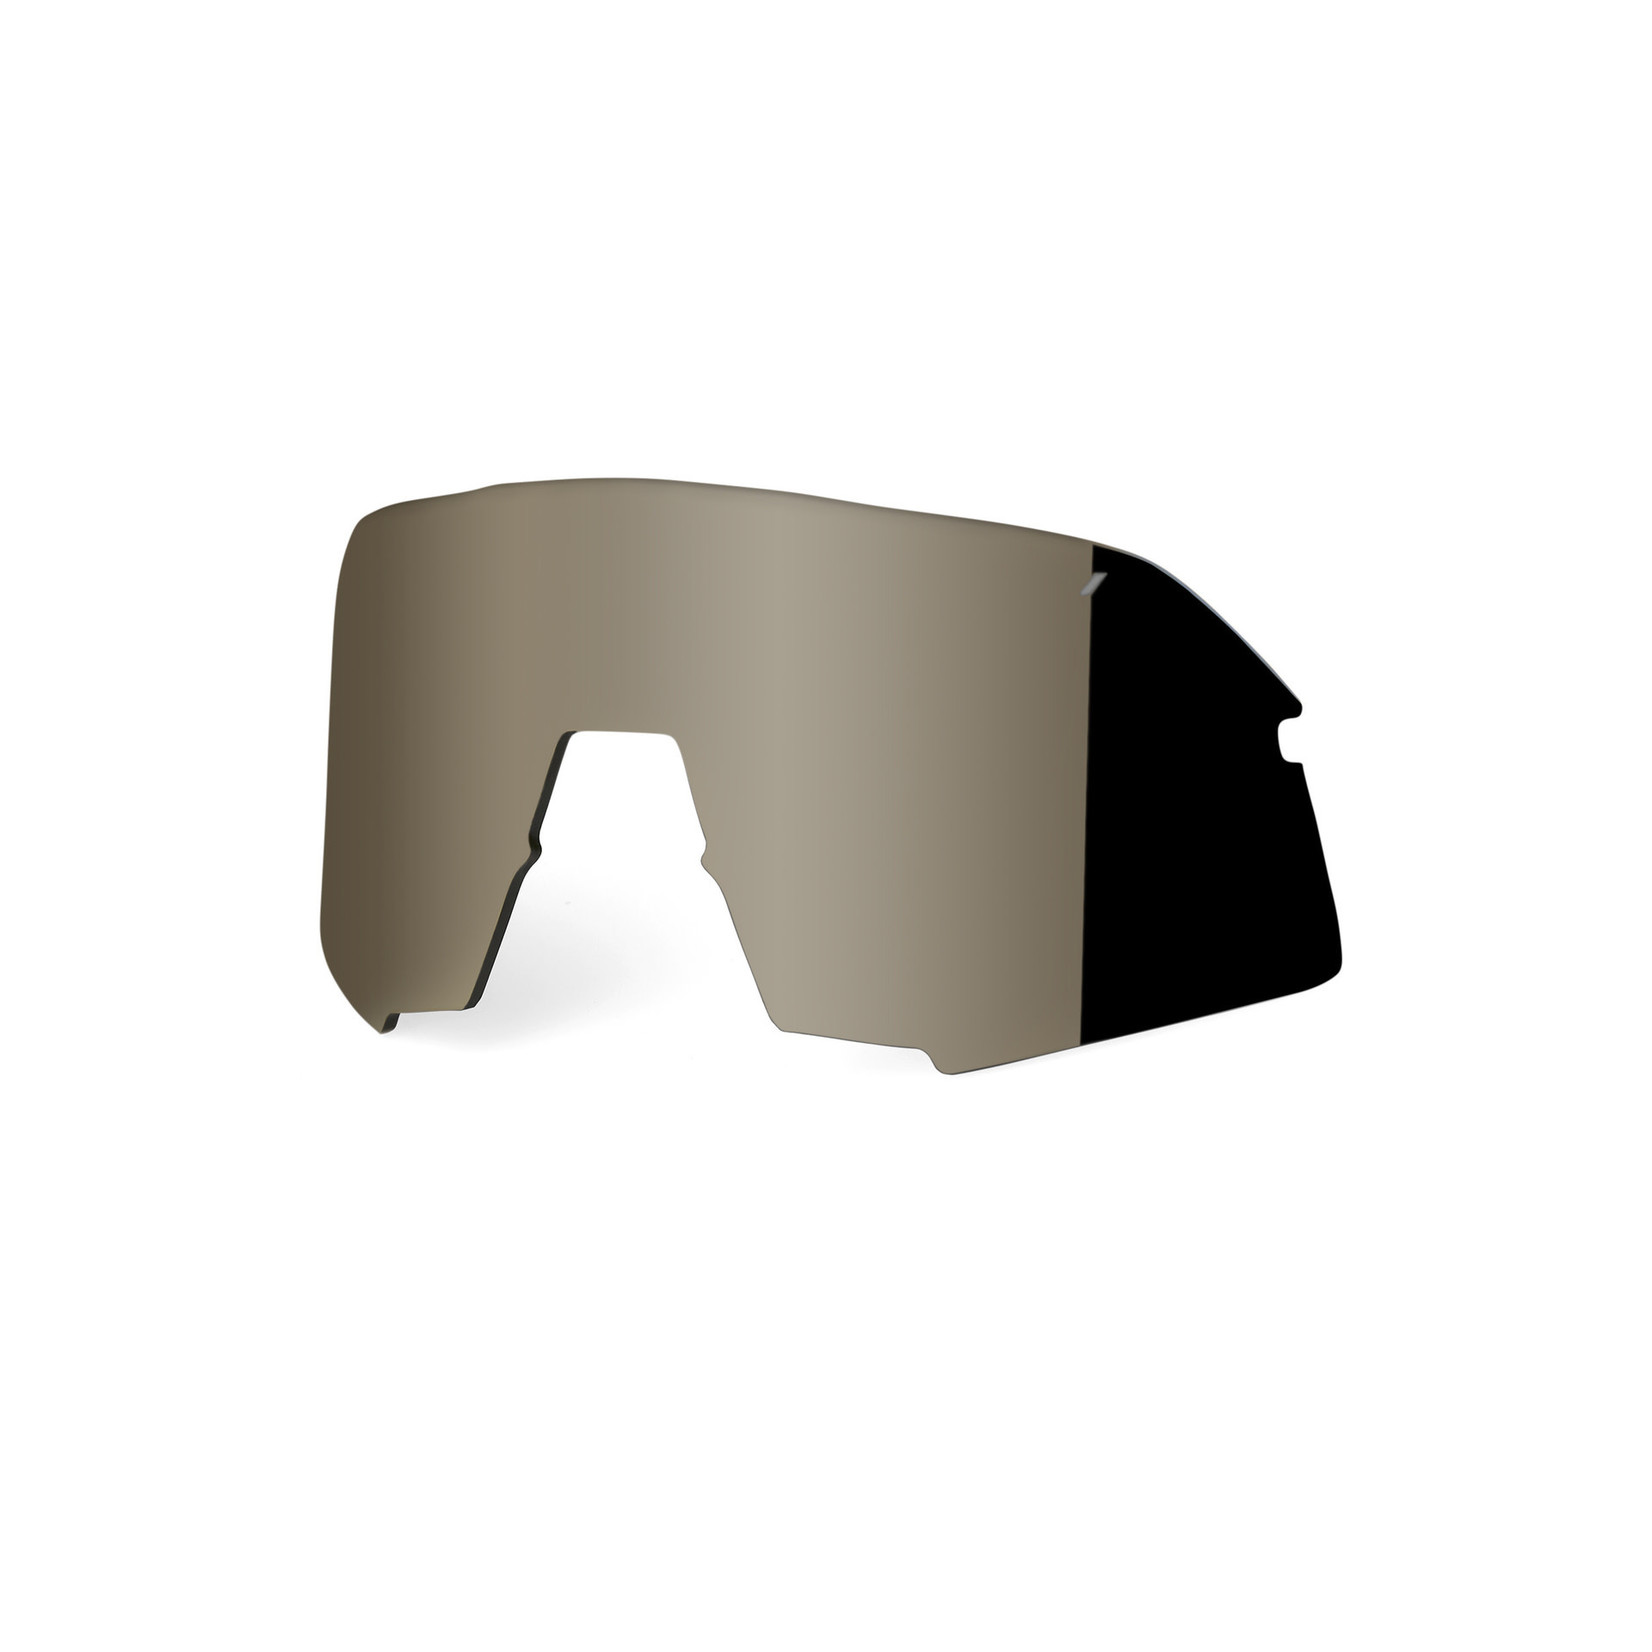 100 Percent 100% S3 Bike Eyewear Replacement Lens - Soft Gold Mirror